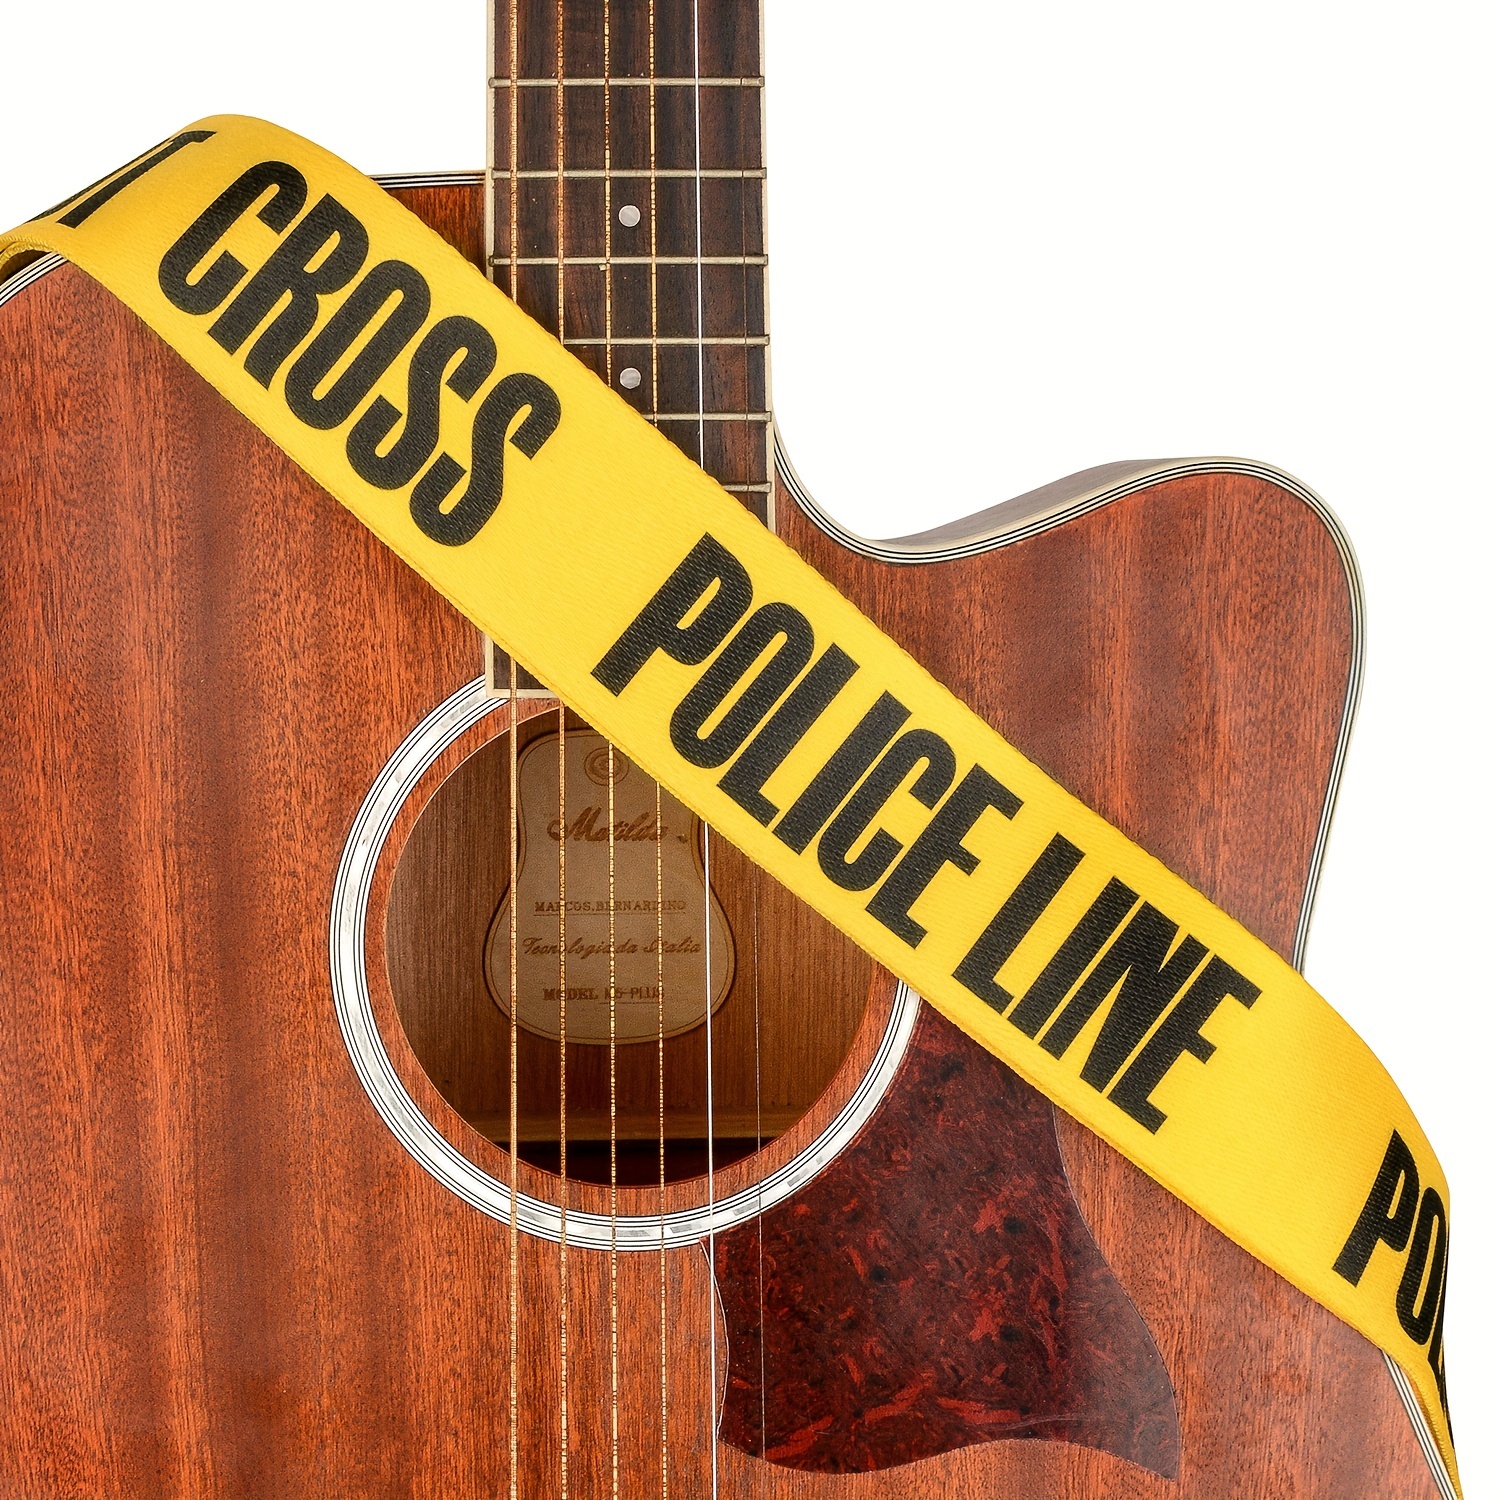 Sangle originale Do Not Cross Police Line de guitare ou basse